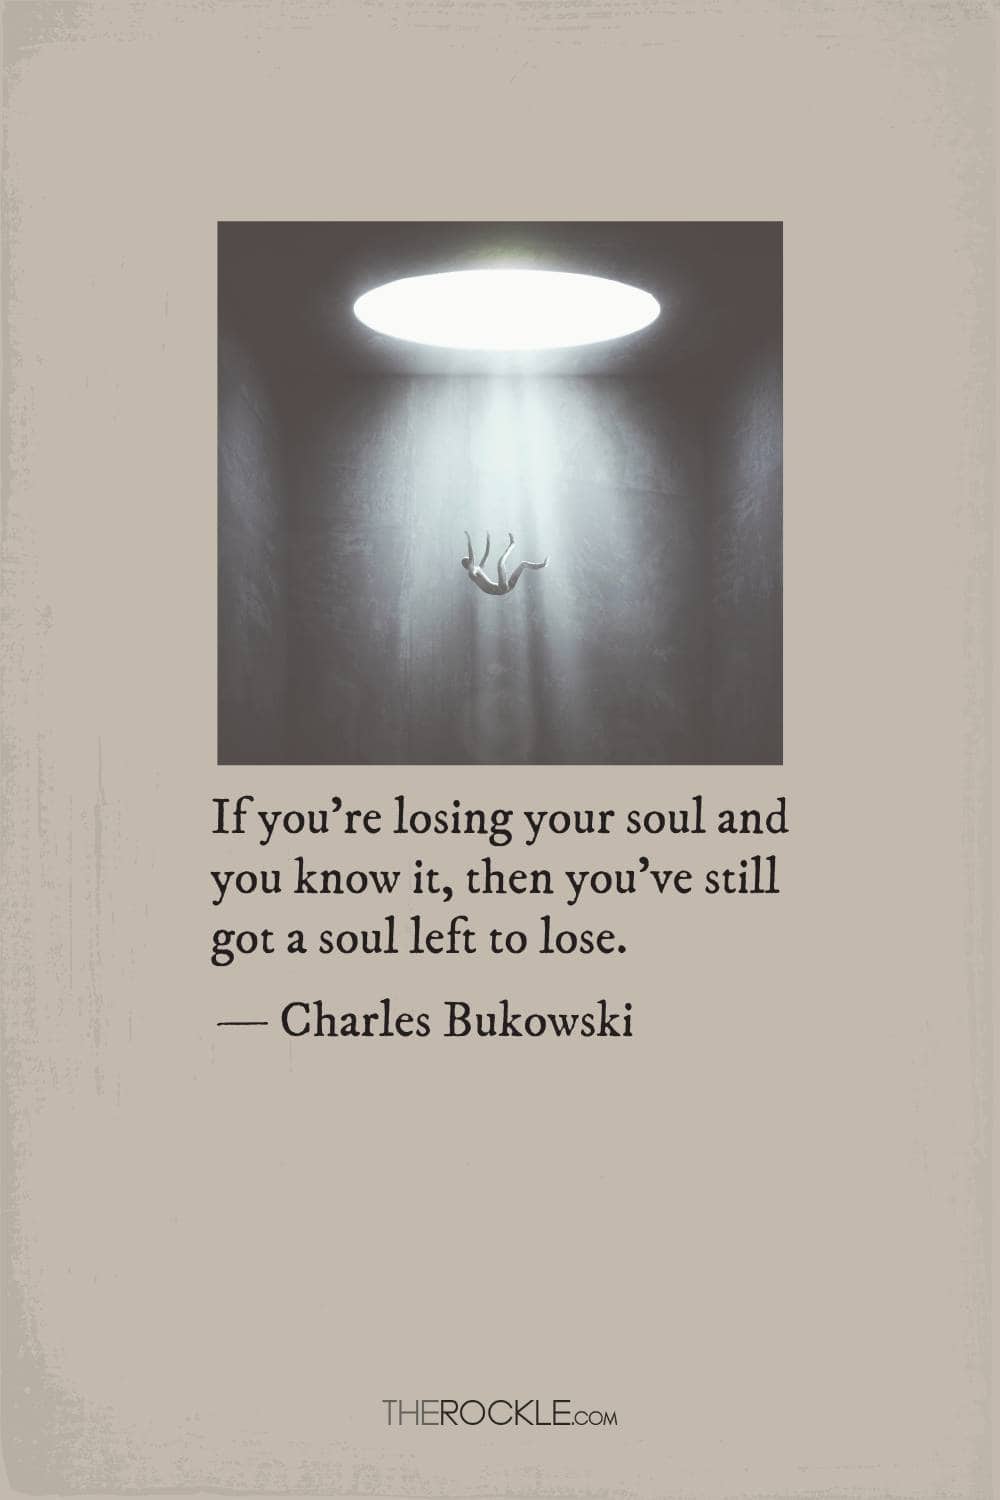 Charles Bukowski on human soul